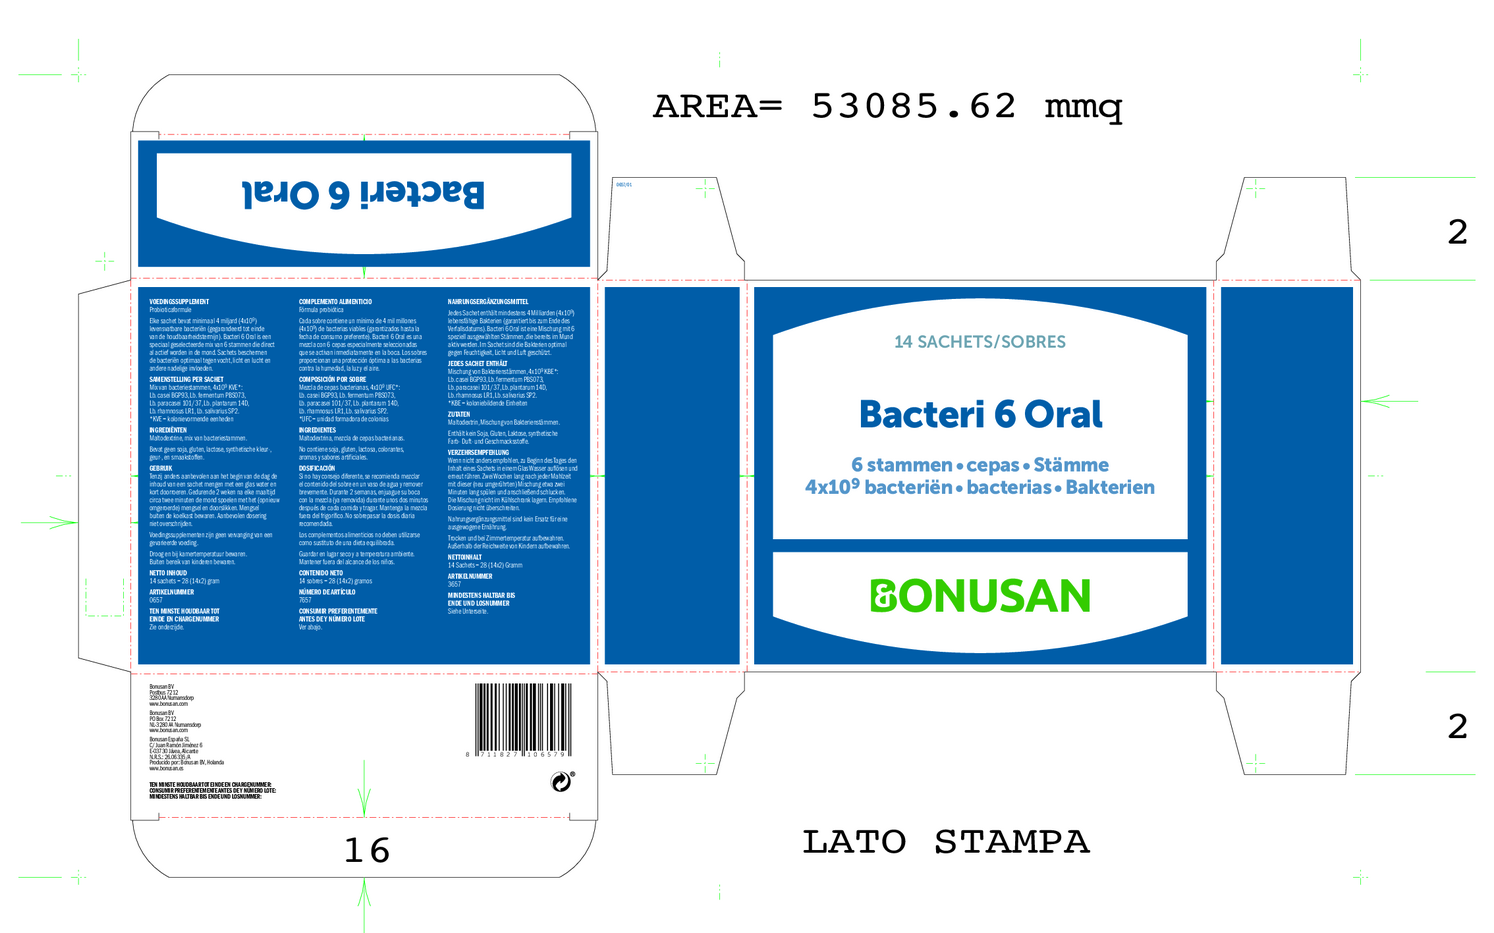 Bacteri 6 Oral Sachets afbeelding van document #1, etiket